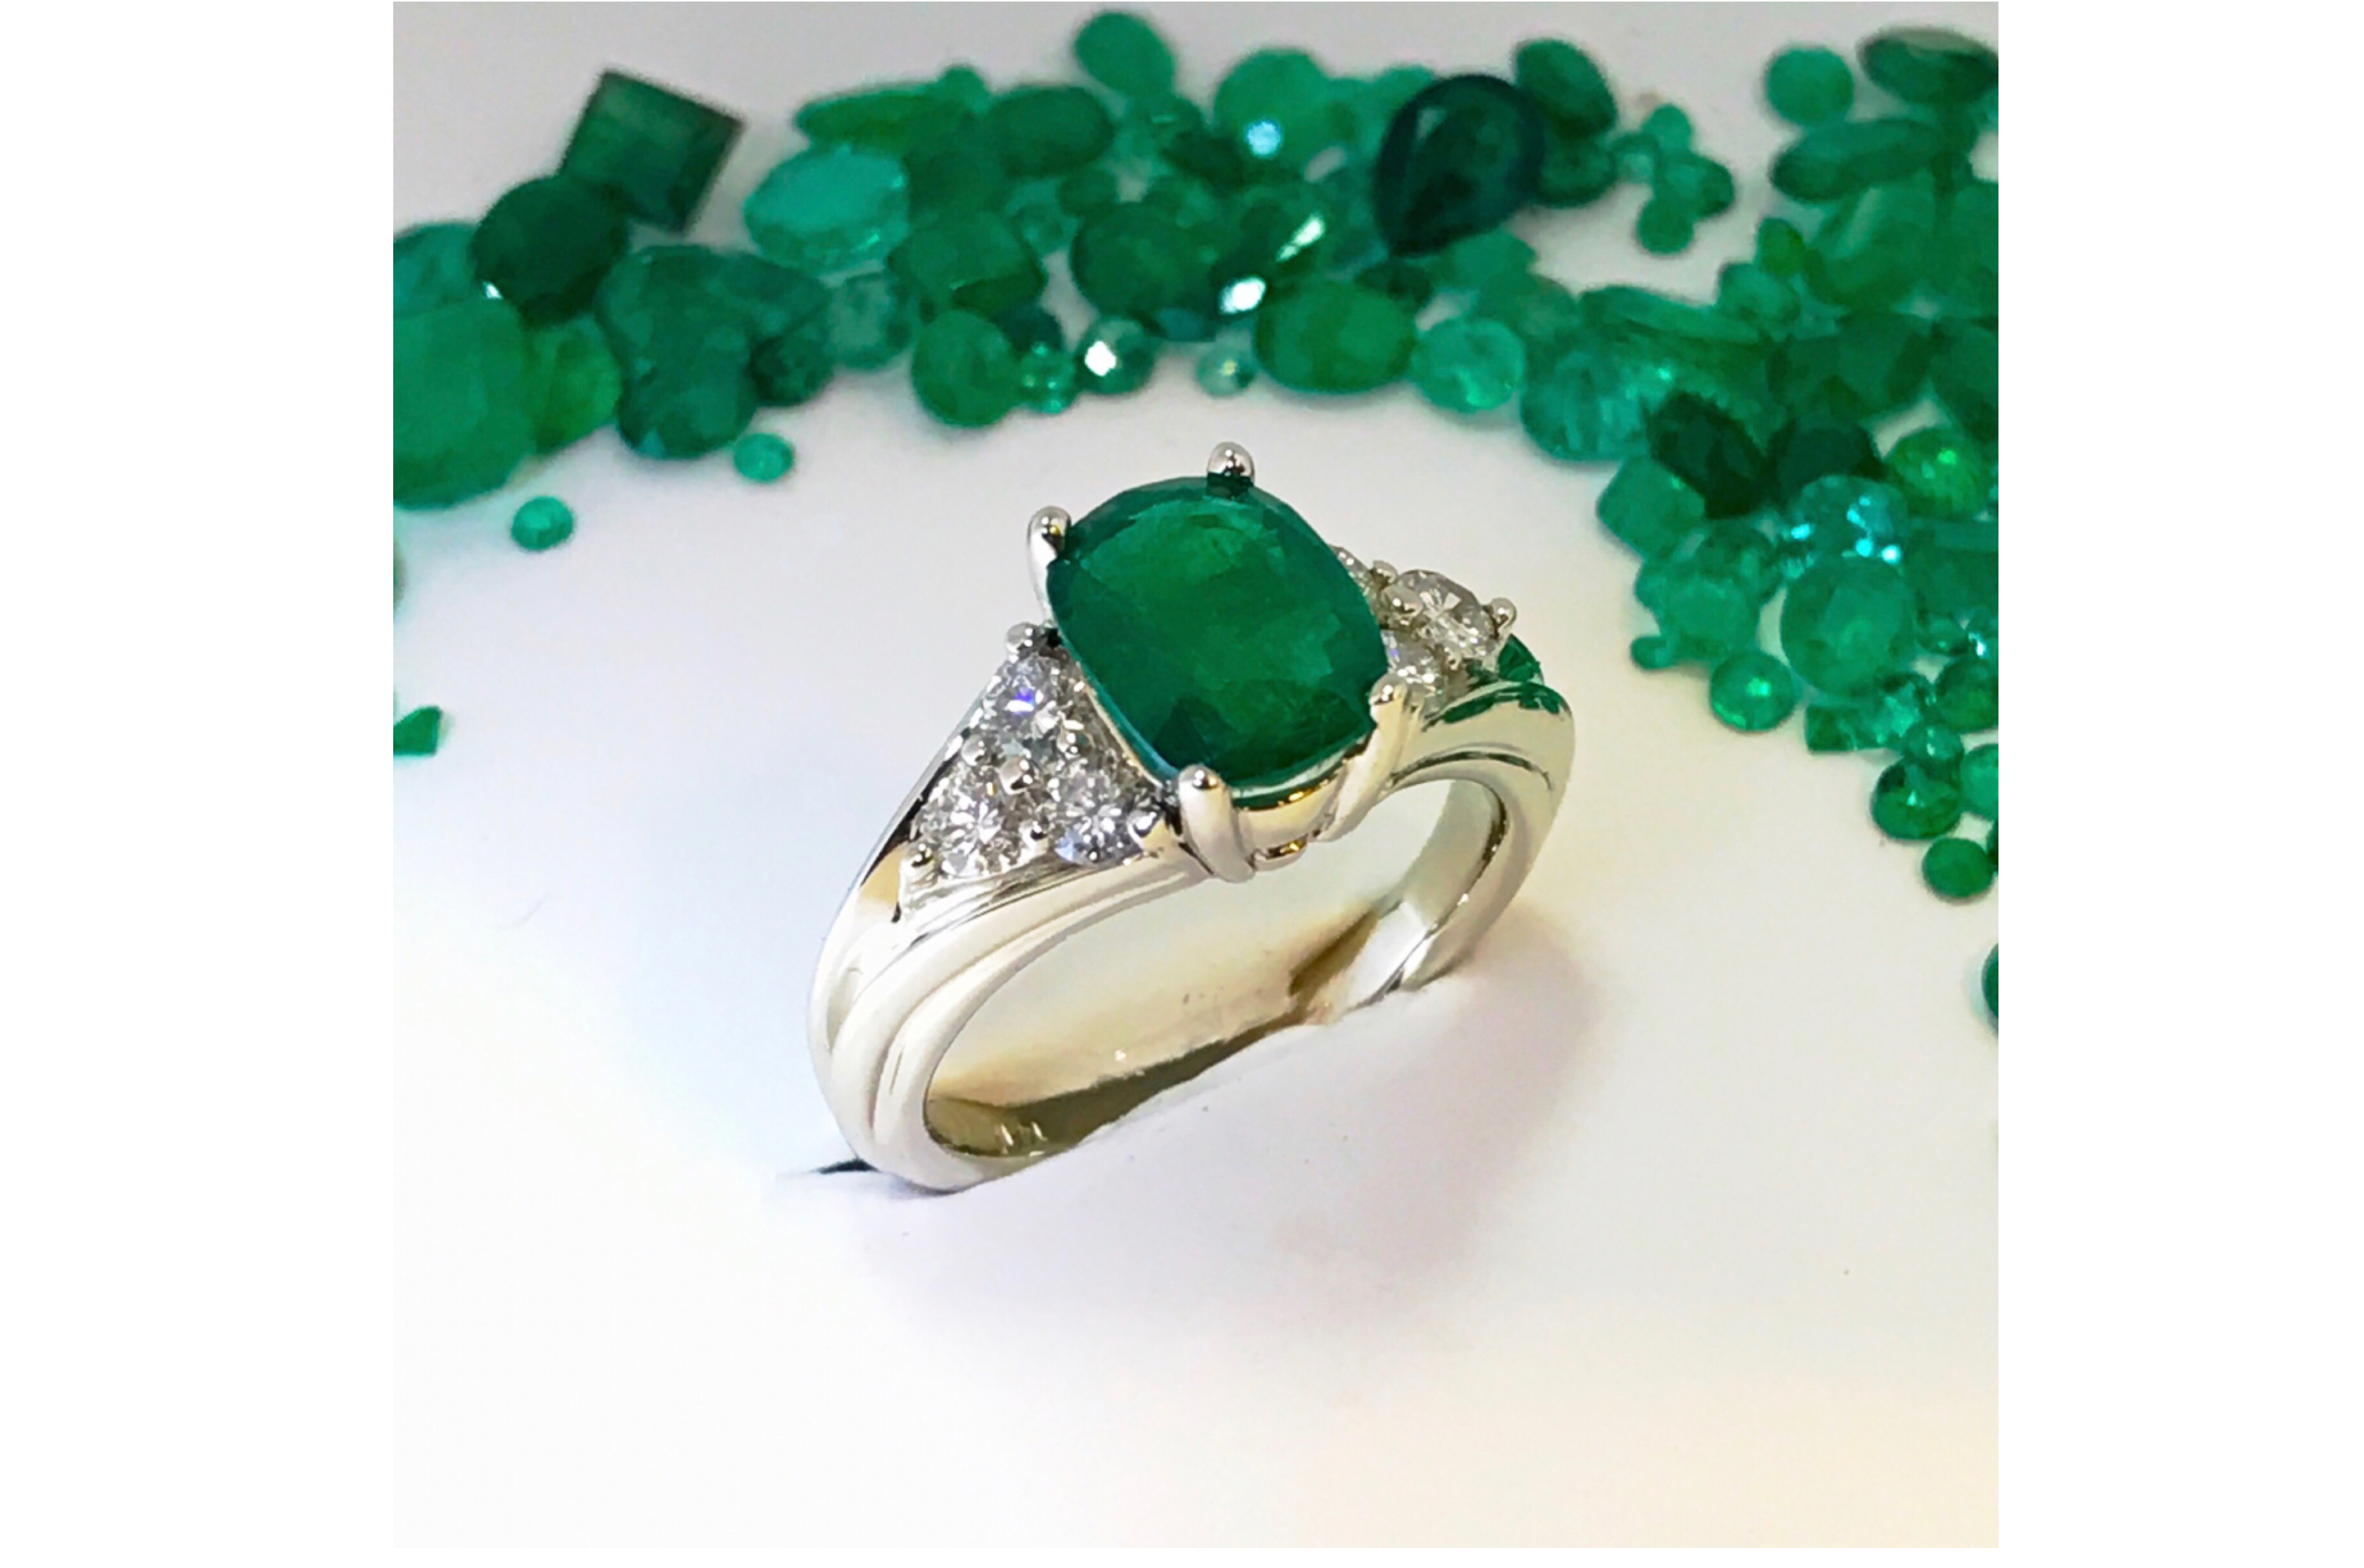 Custom Designed 14 Kt White Gold Emerald and Diamond Ring